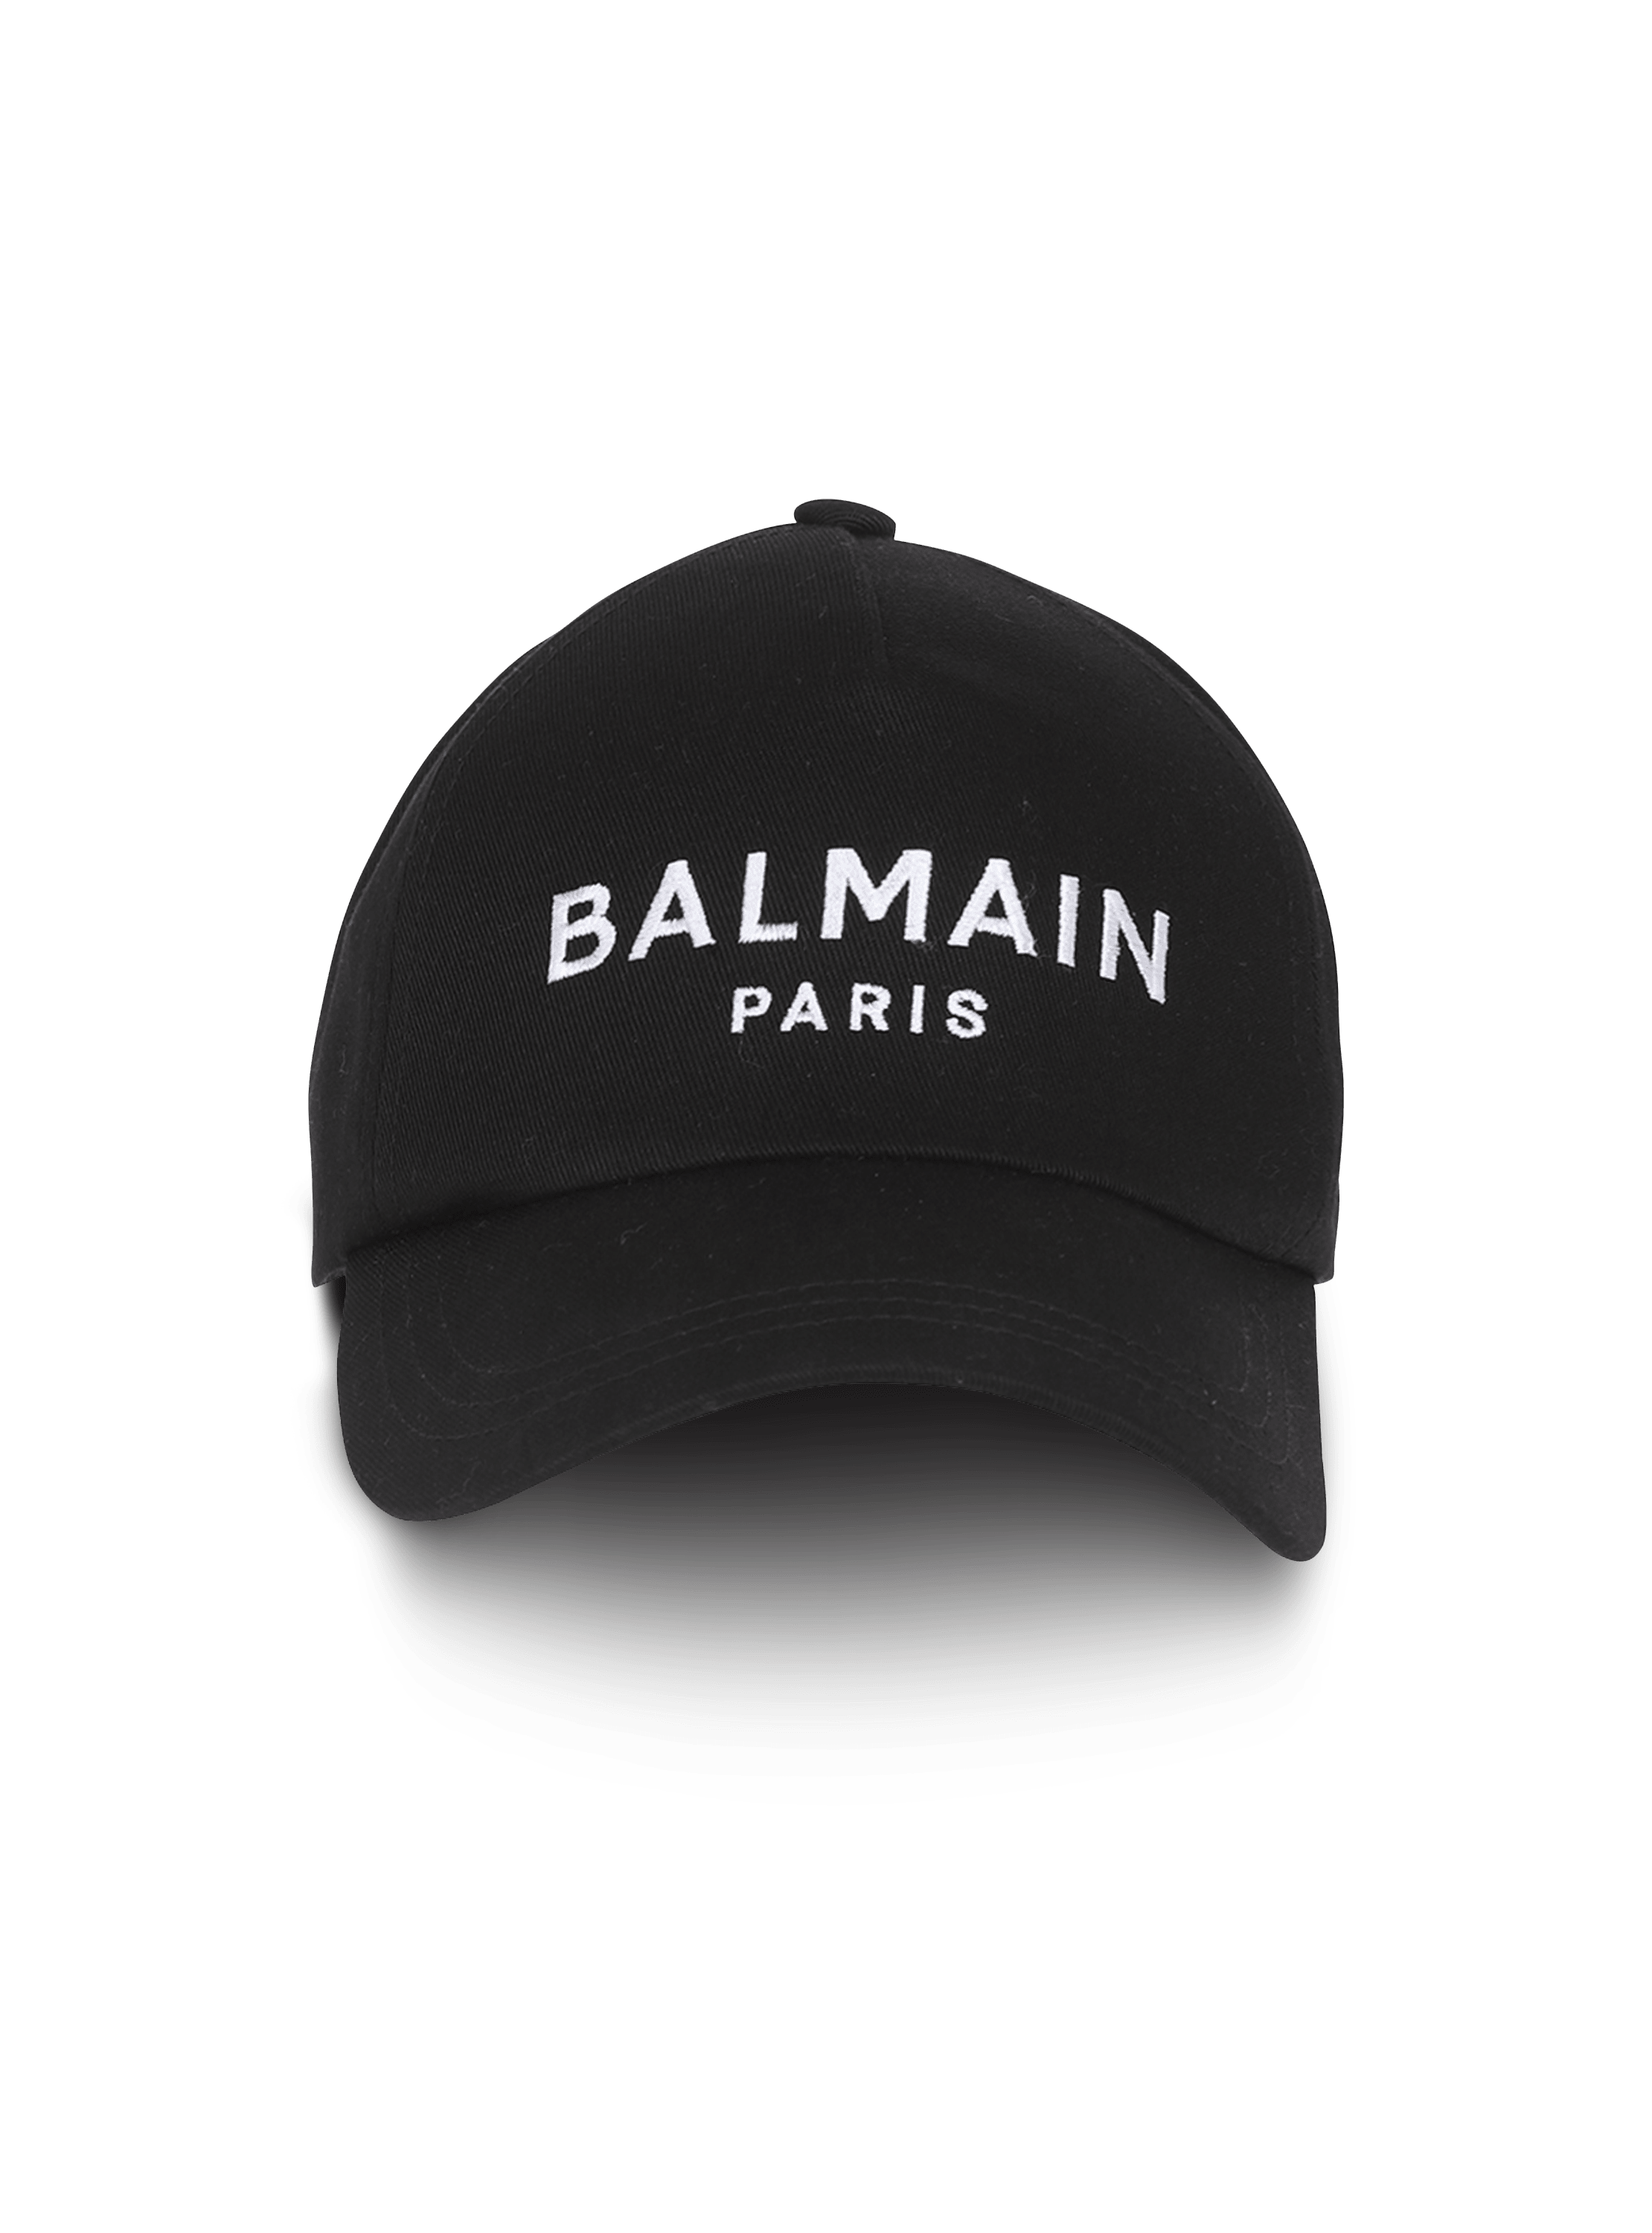 Balmain Paris刺绣标志鸭舌帽